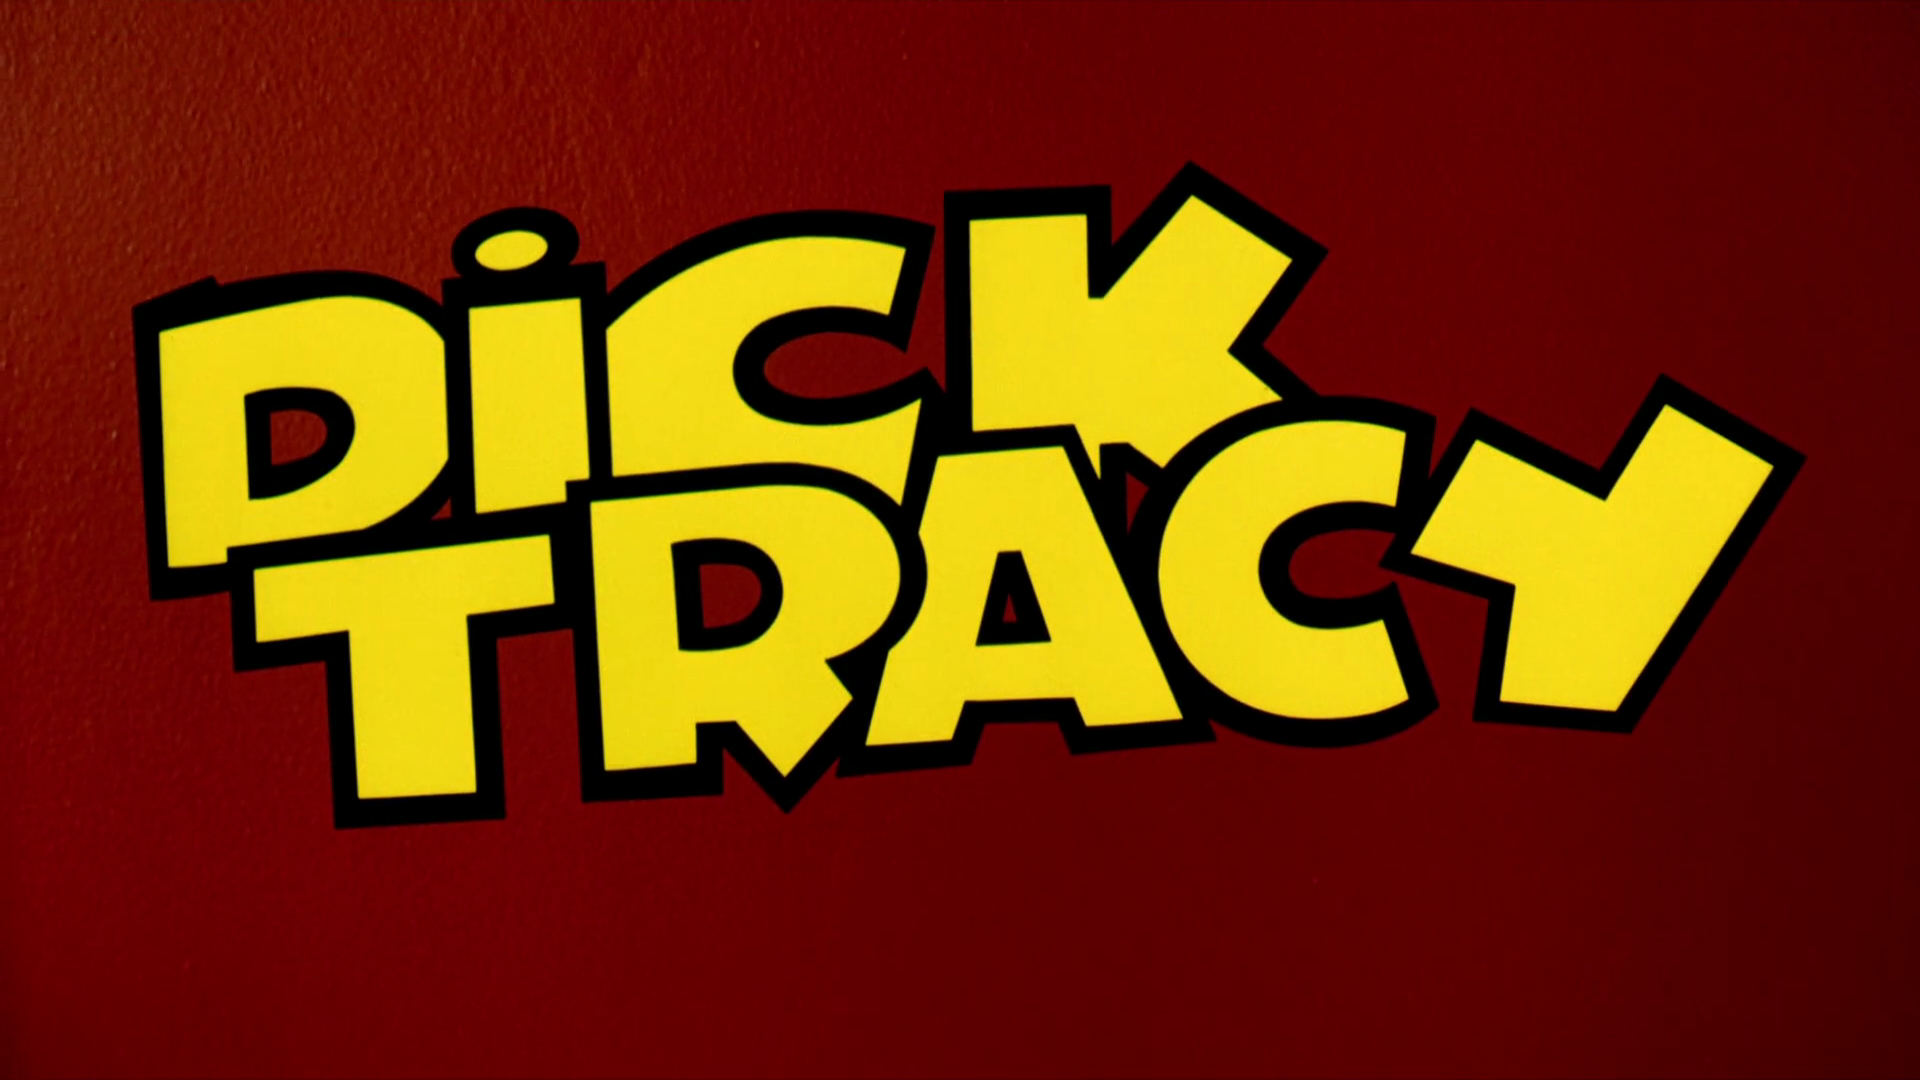 Имя dick. Логотипы dick Tracy.